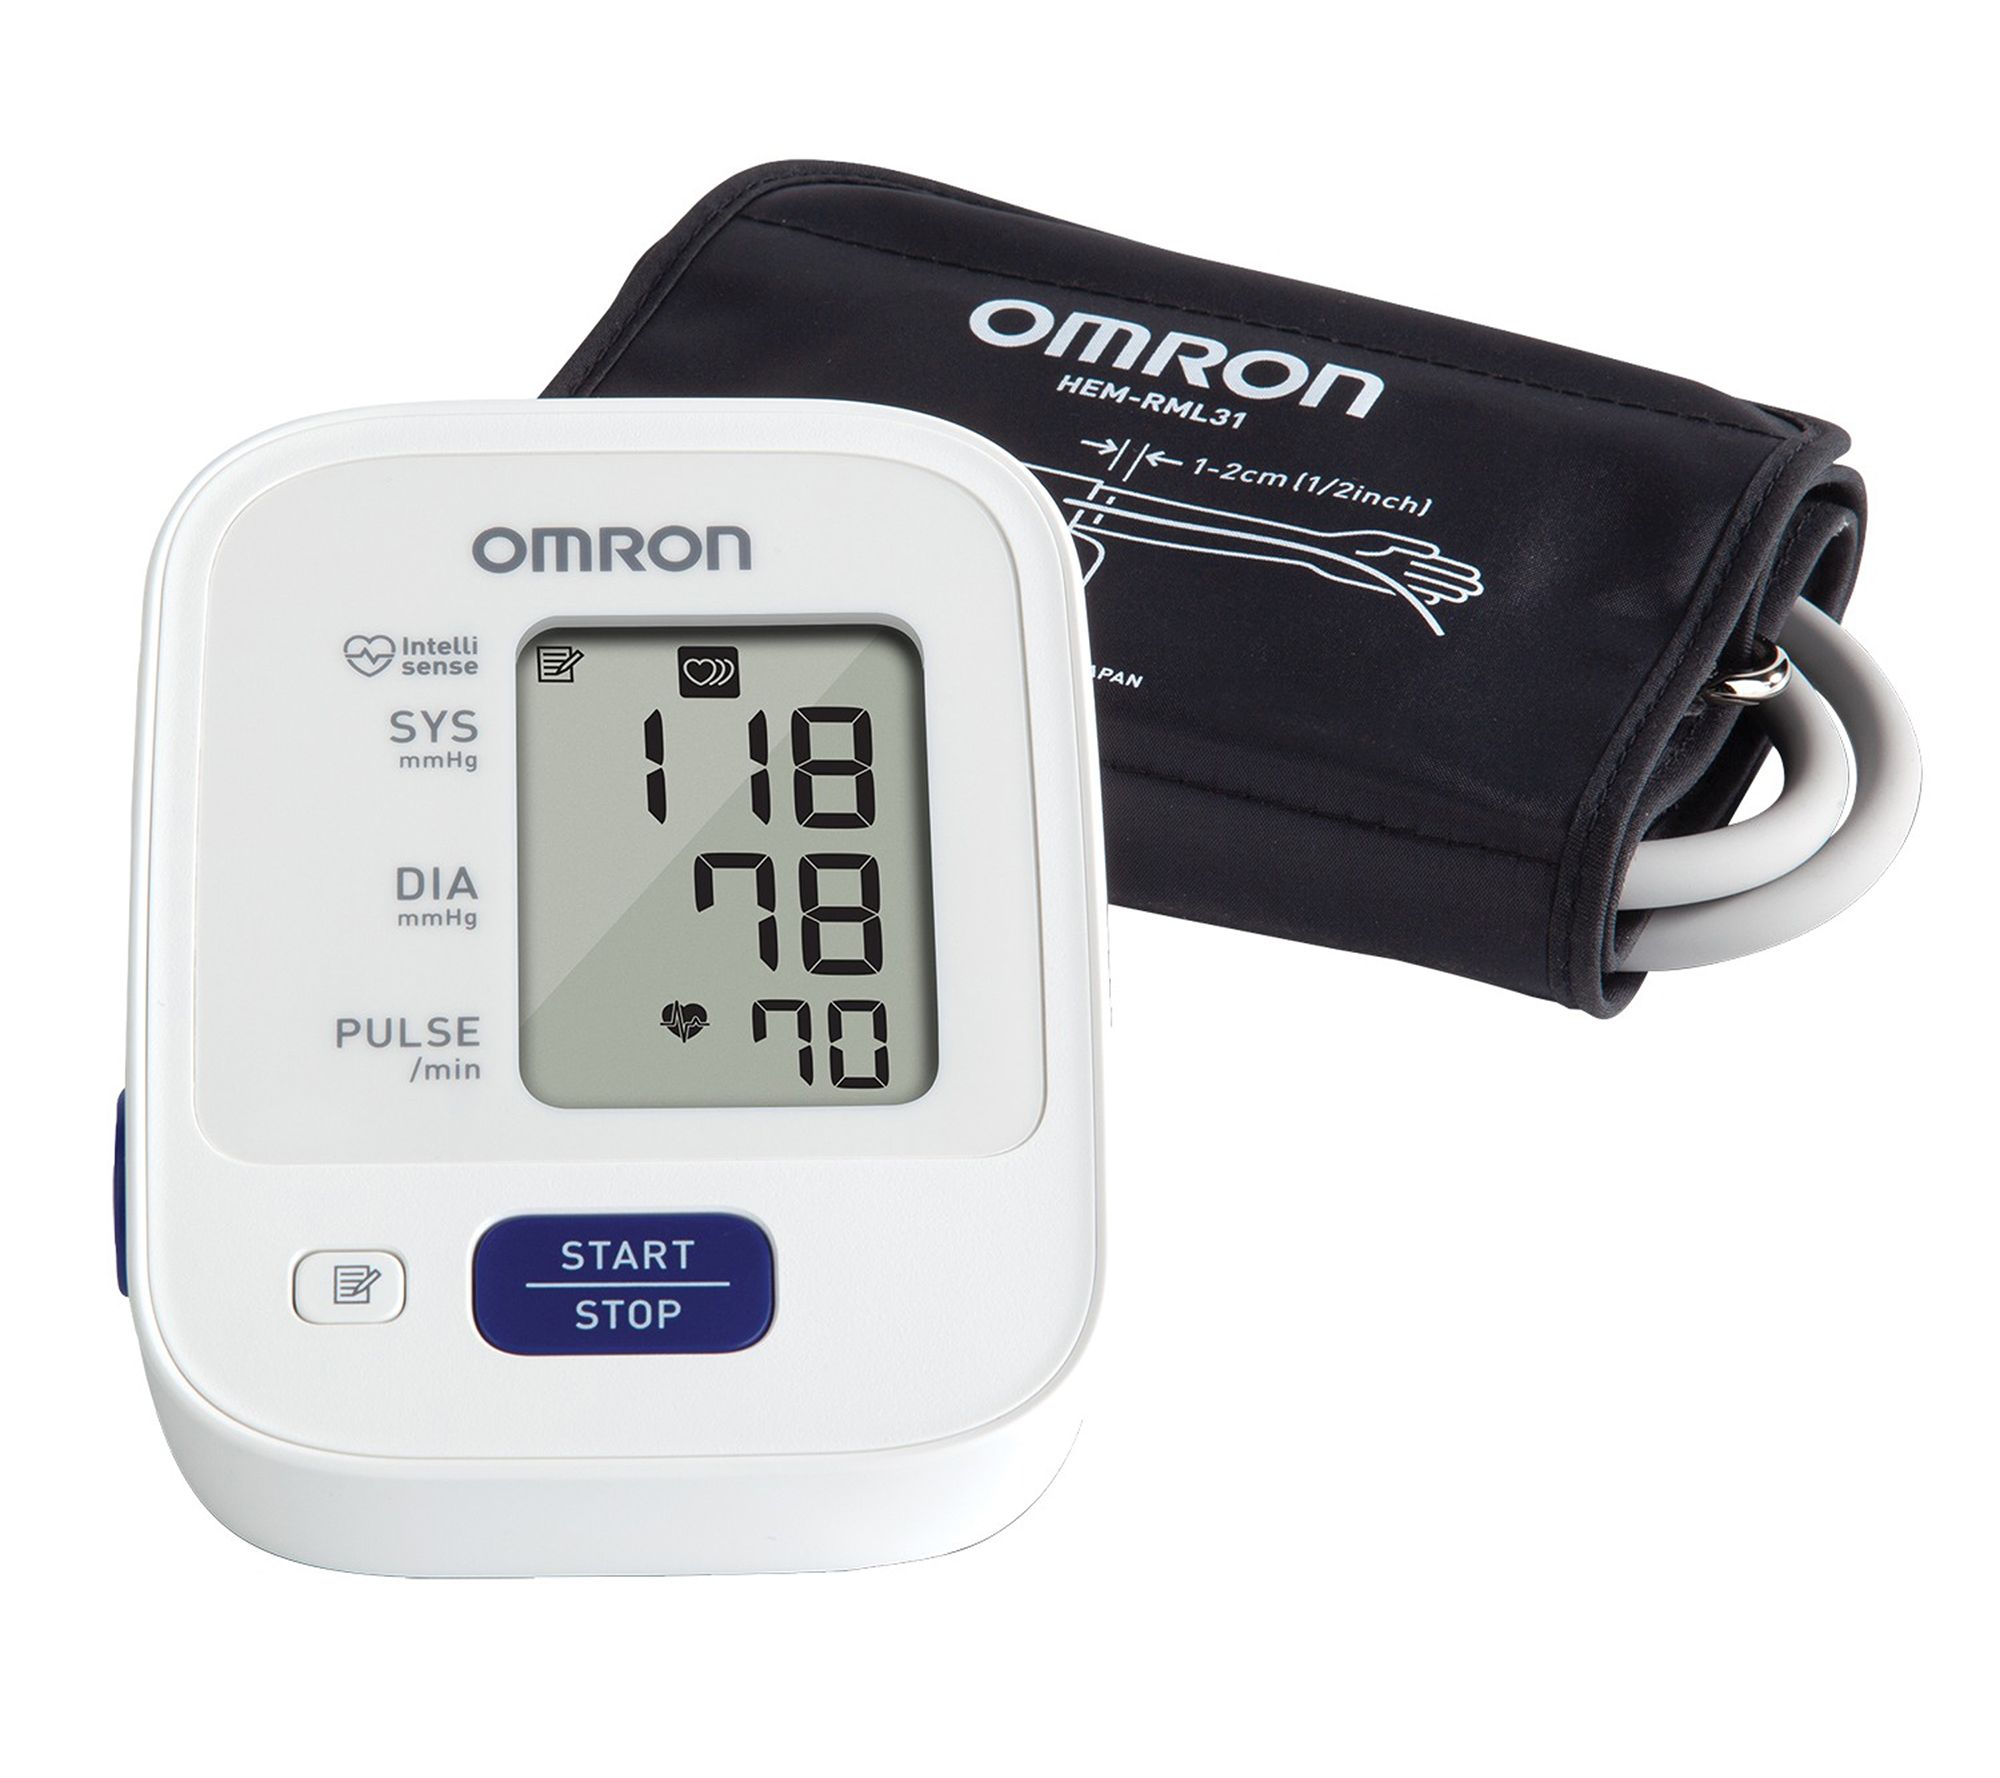 Fingerhut - Omron 3 Series Wrist Blood Pressure Monitor